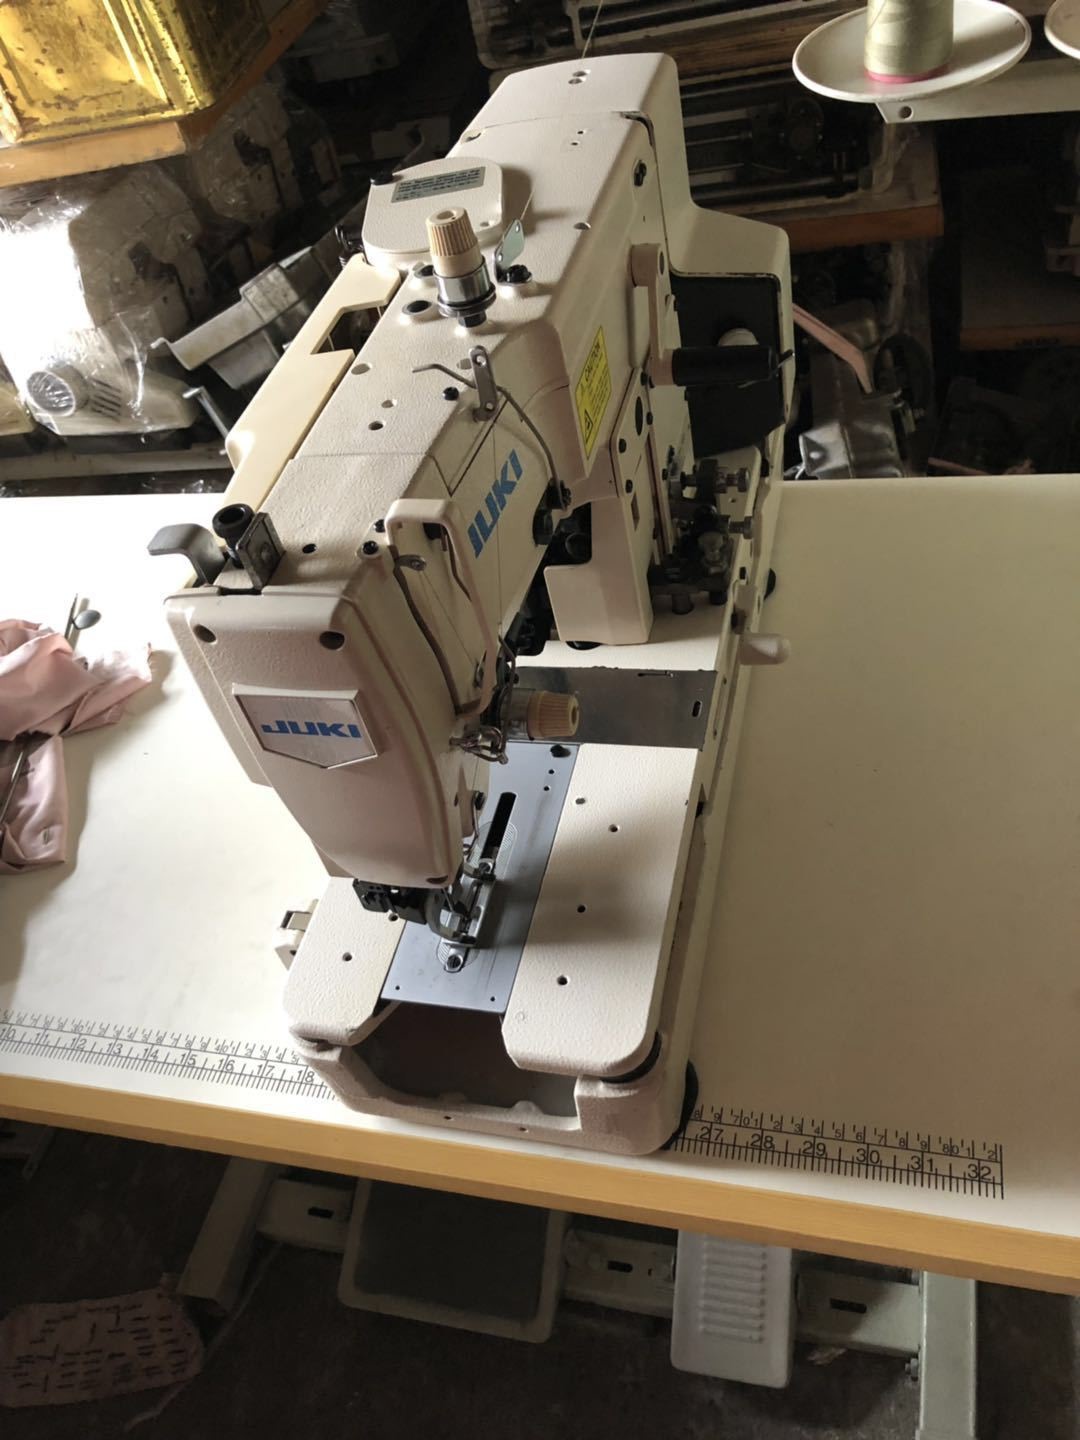  Used 781 Juki Button Hole Sewing Machine Servo Control Power Saving Manufactures